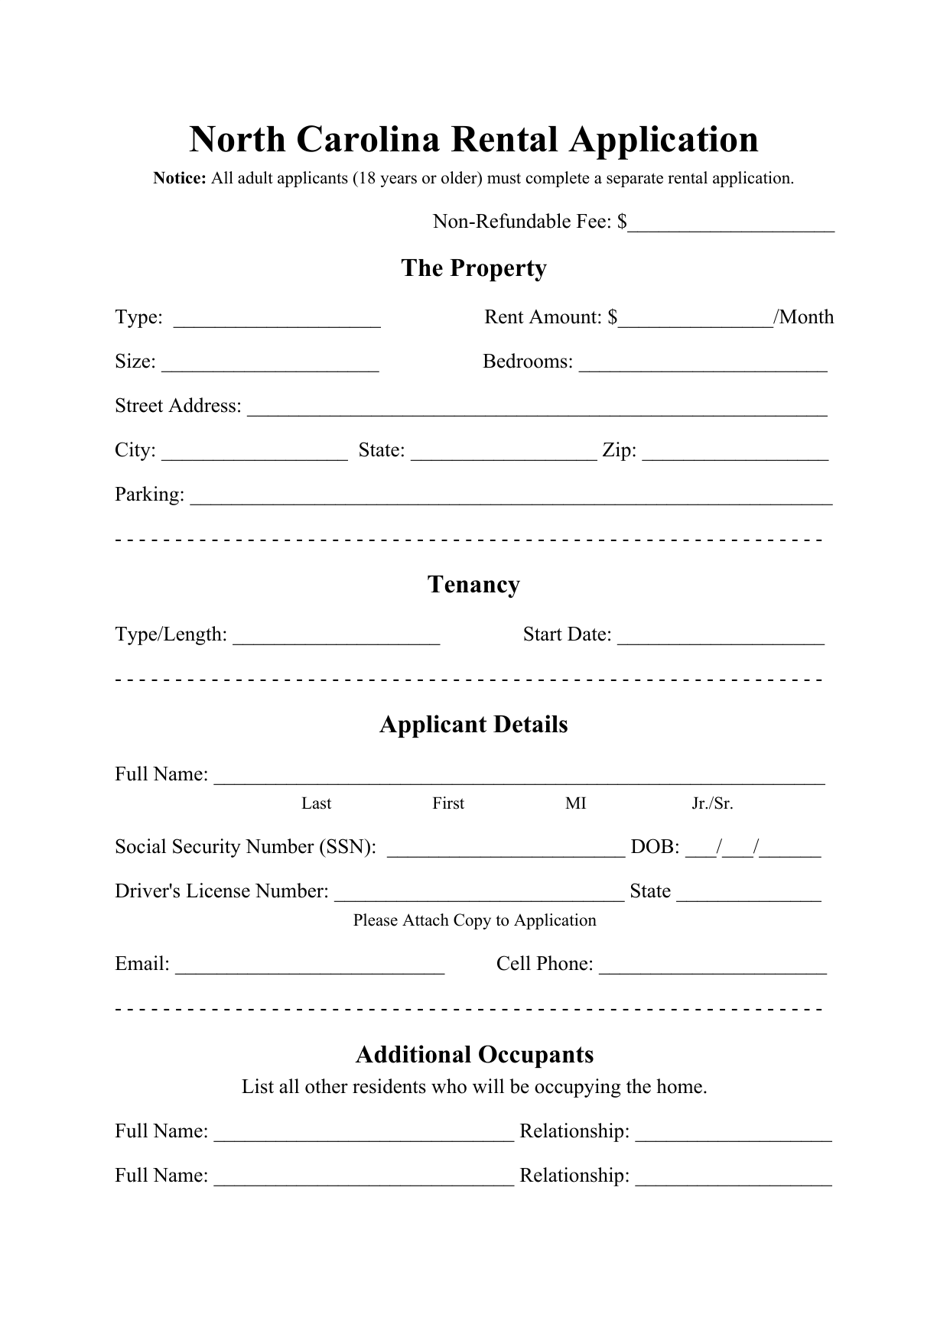 Rental Application Form - North Carolina, Page 1